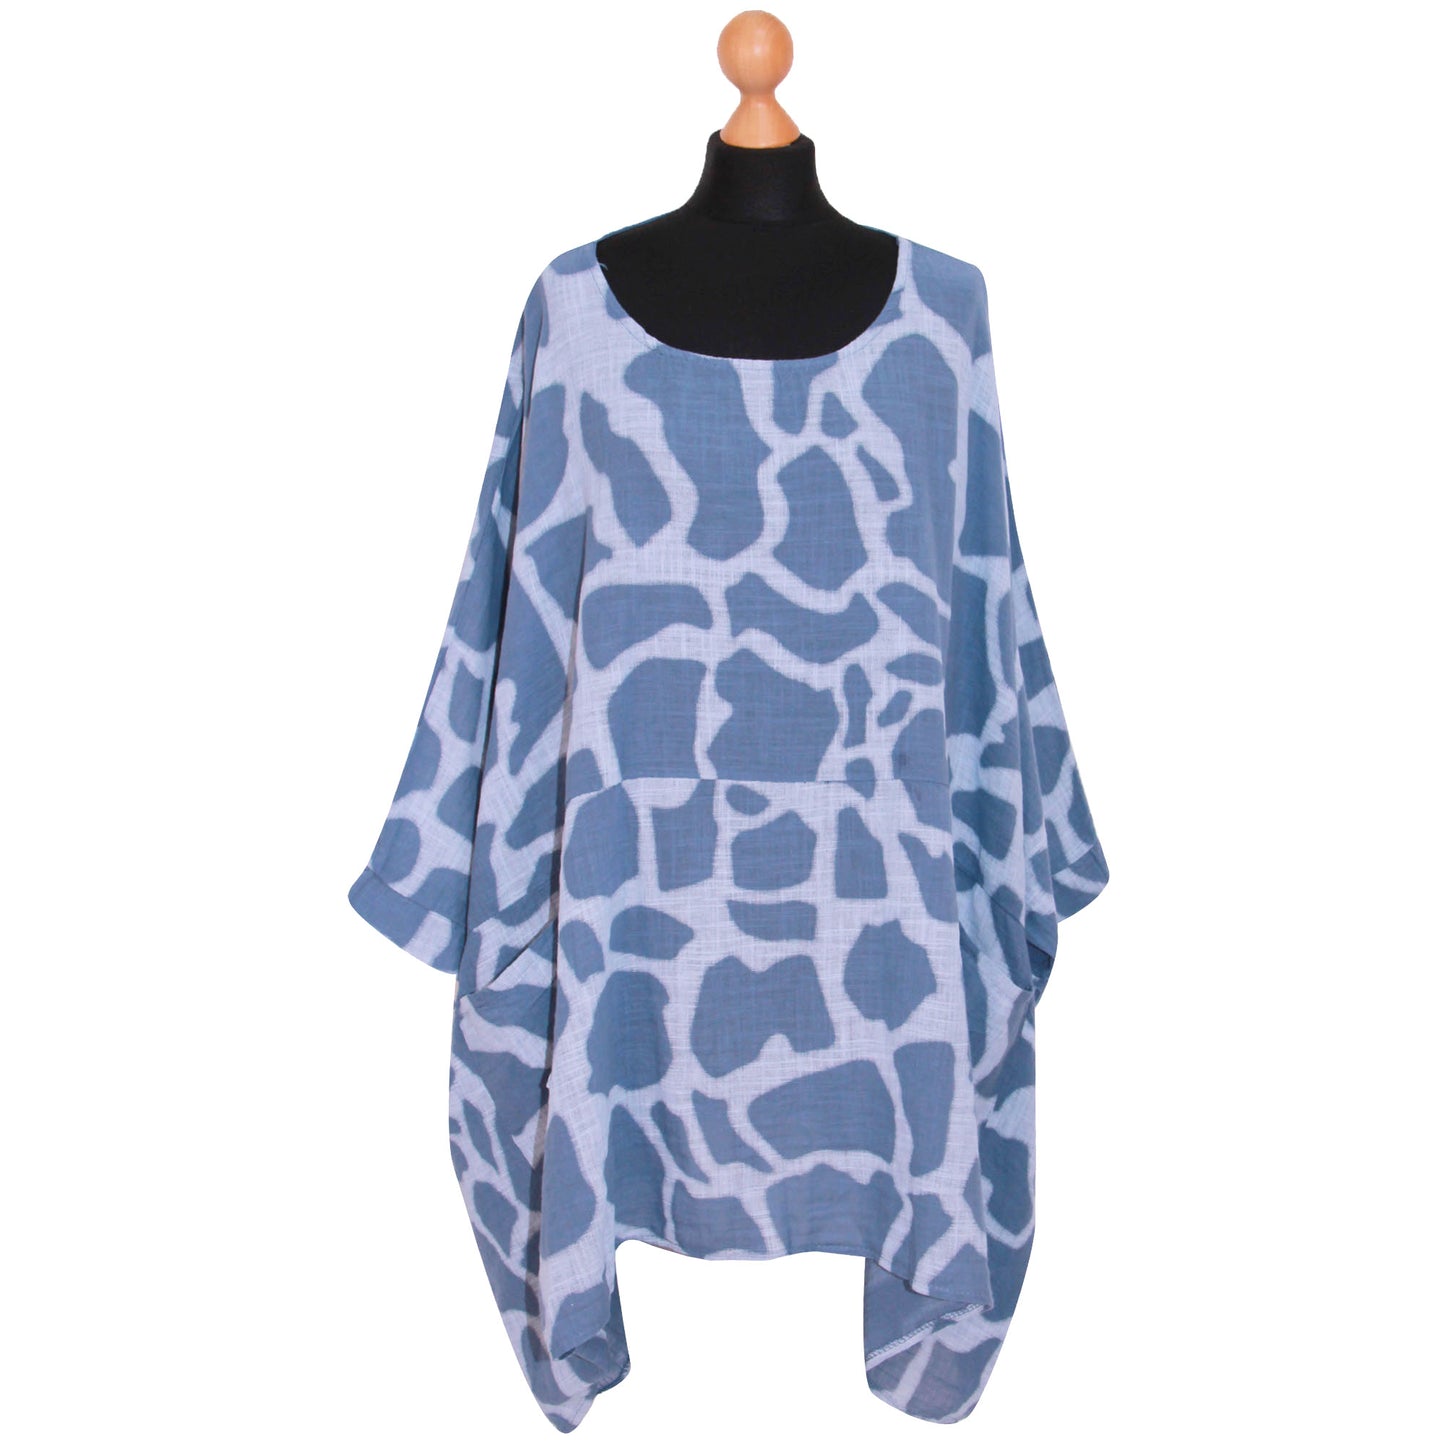 Giraffe dierenprint dames top met print: stijlvolle en trendy damesmode